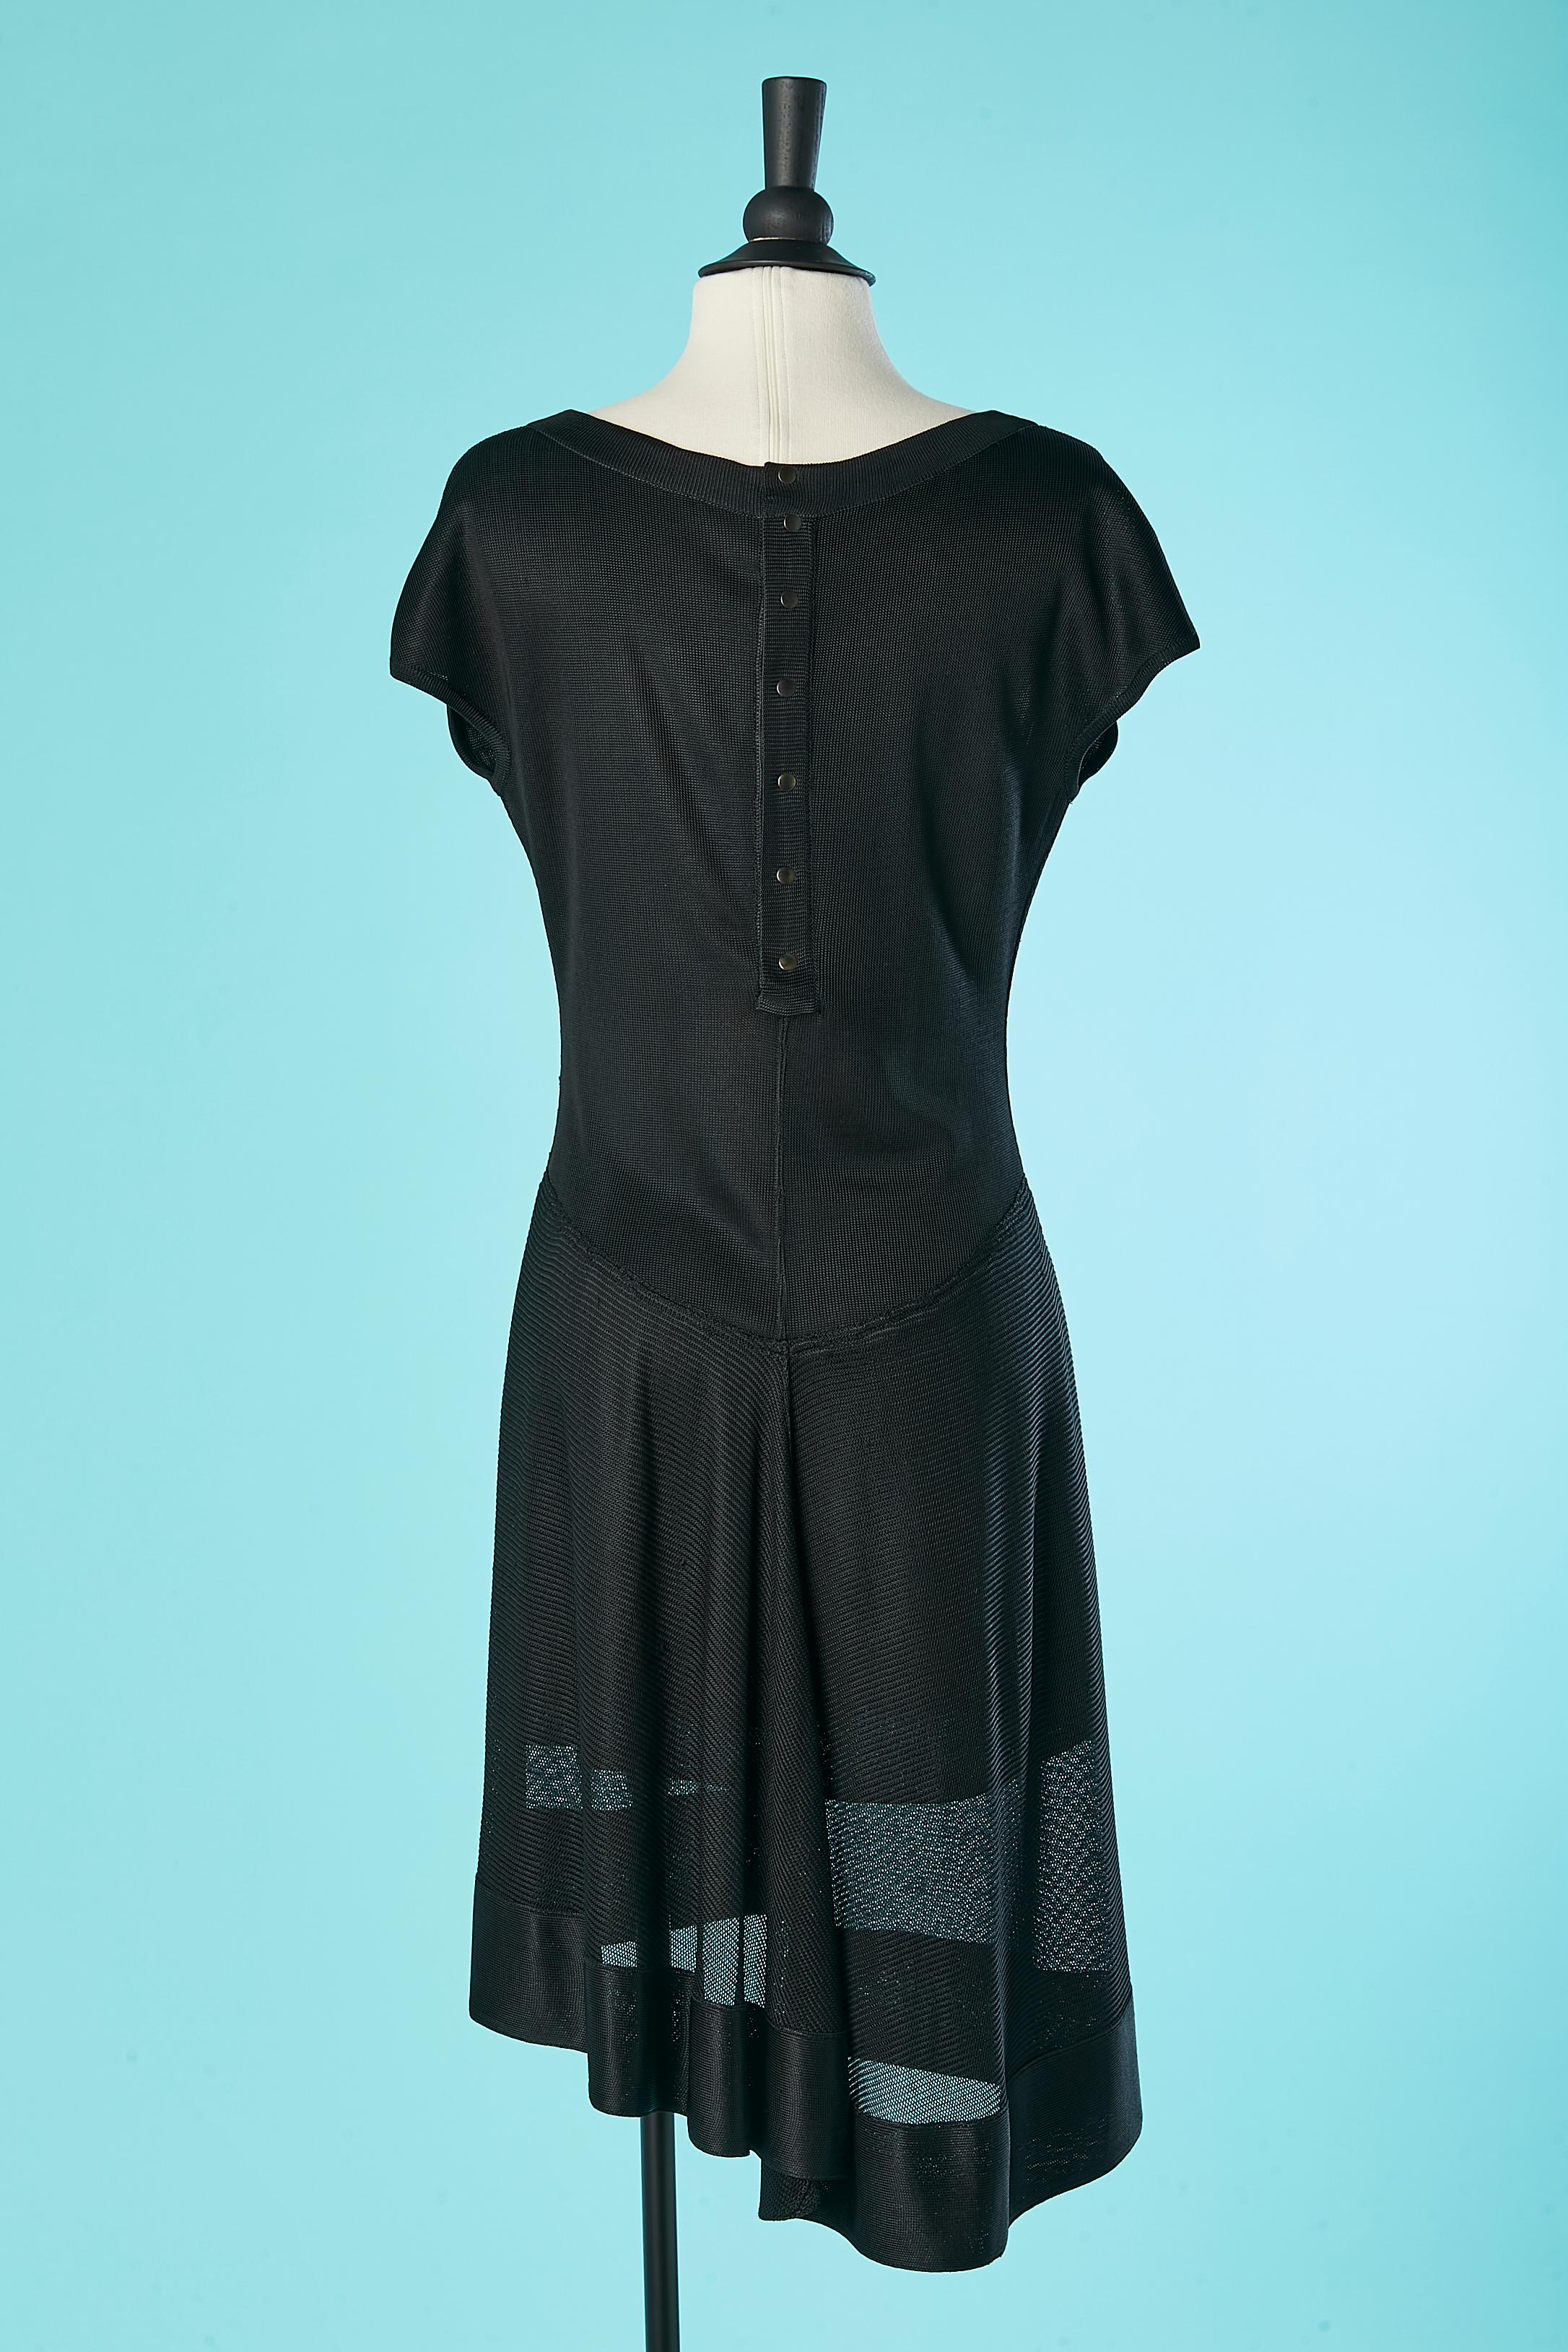 Black rayon knit cocktail dress Alaïa  For Sale 4